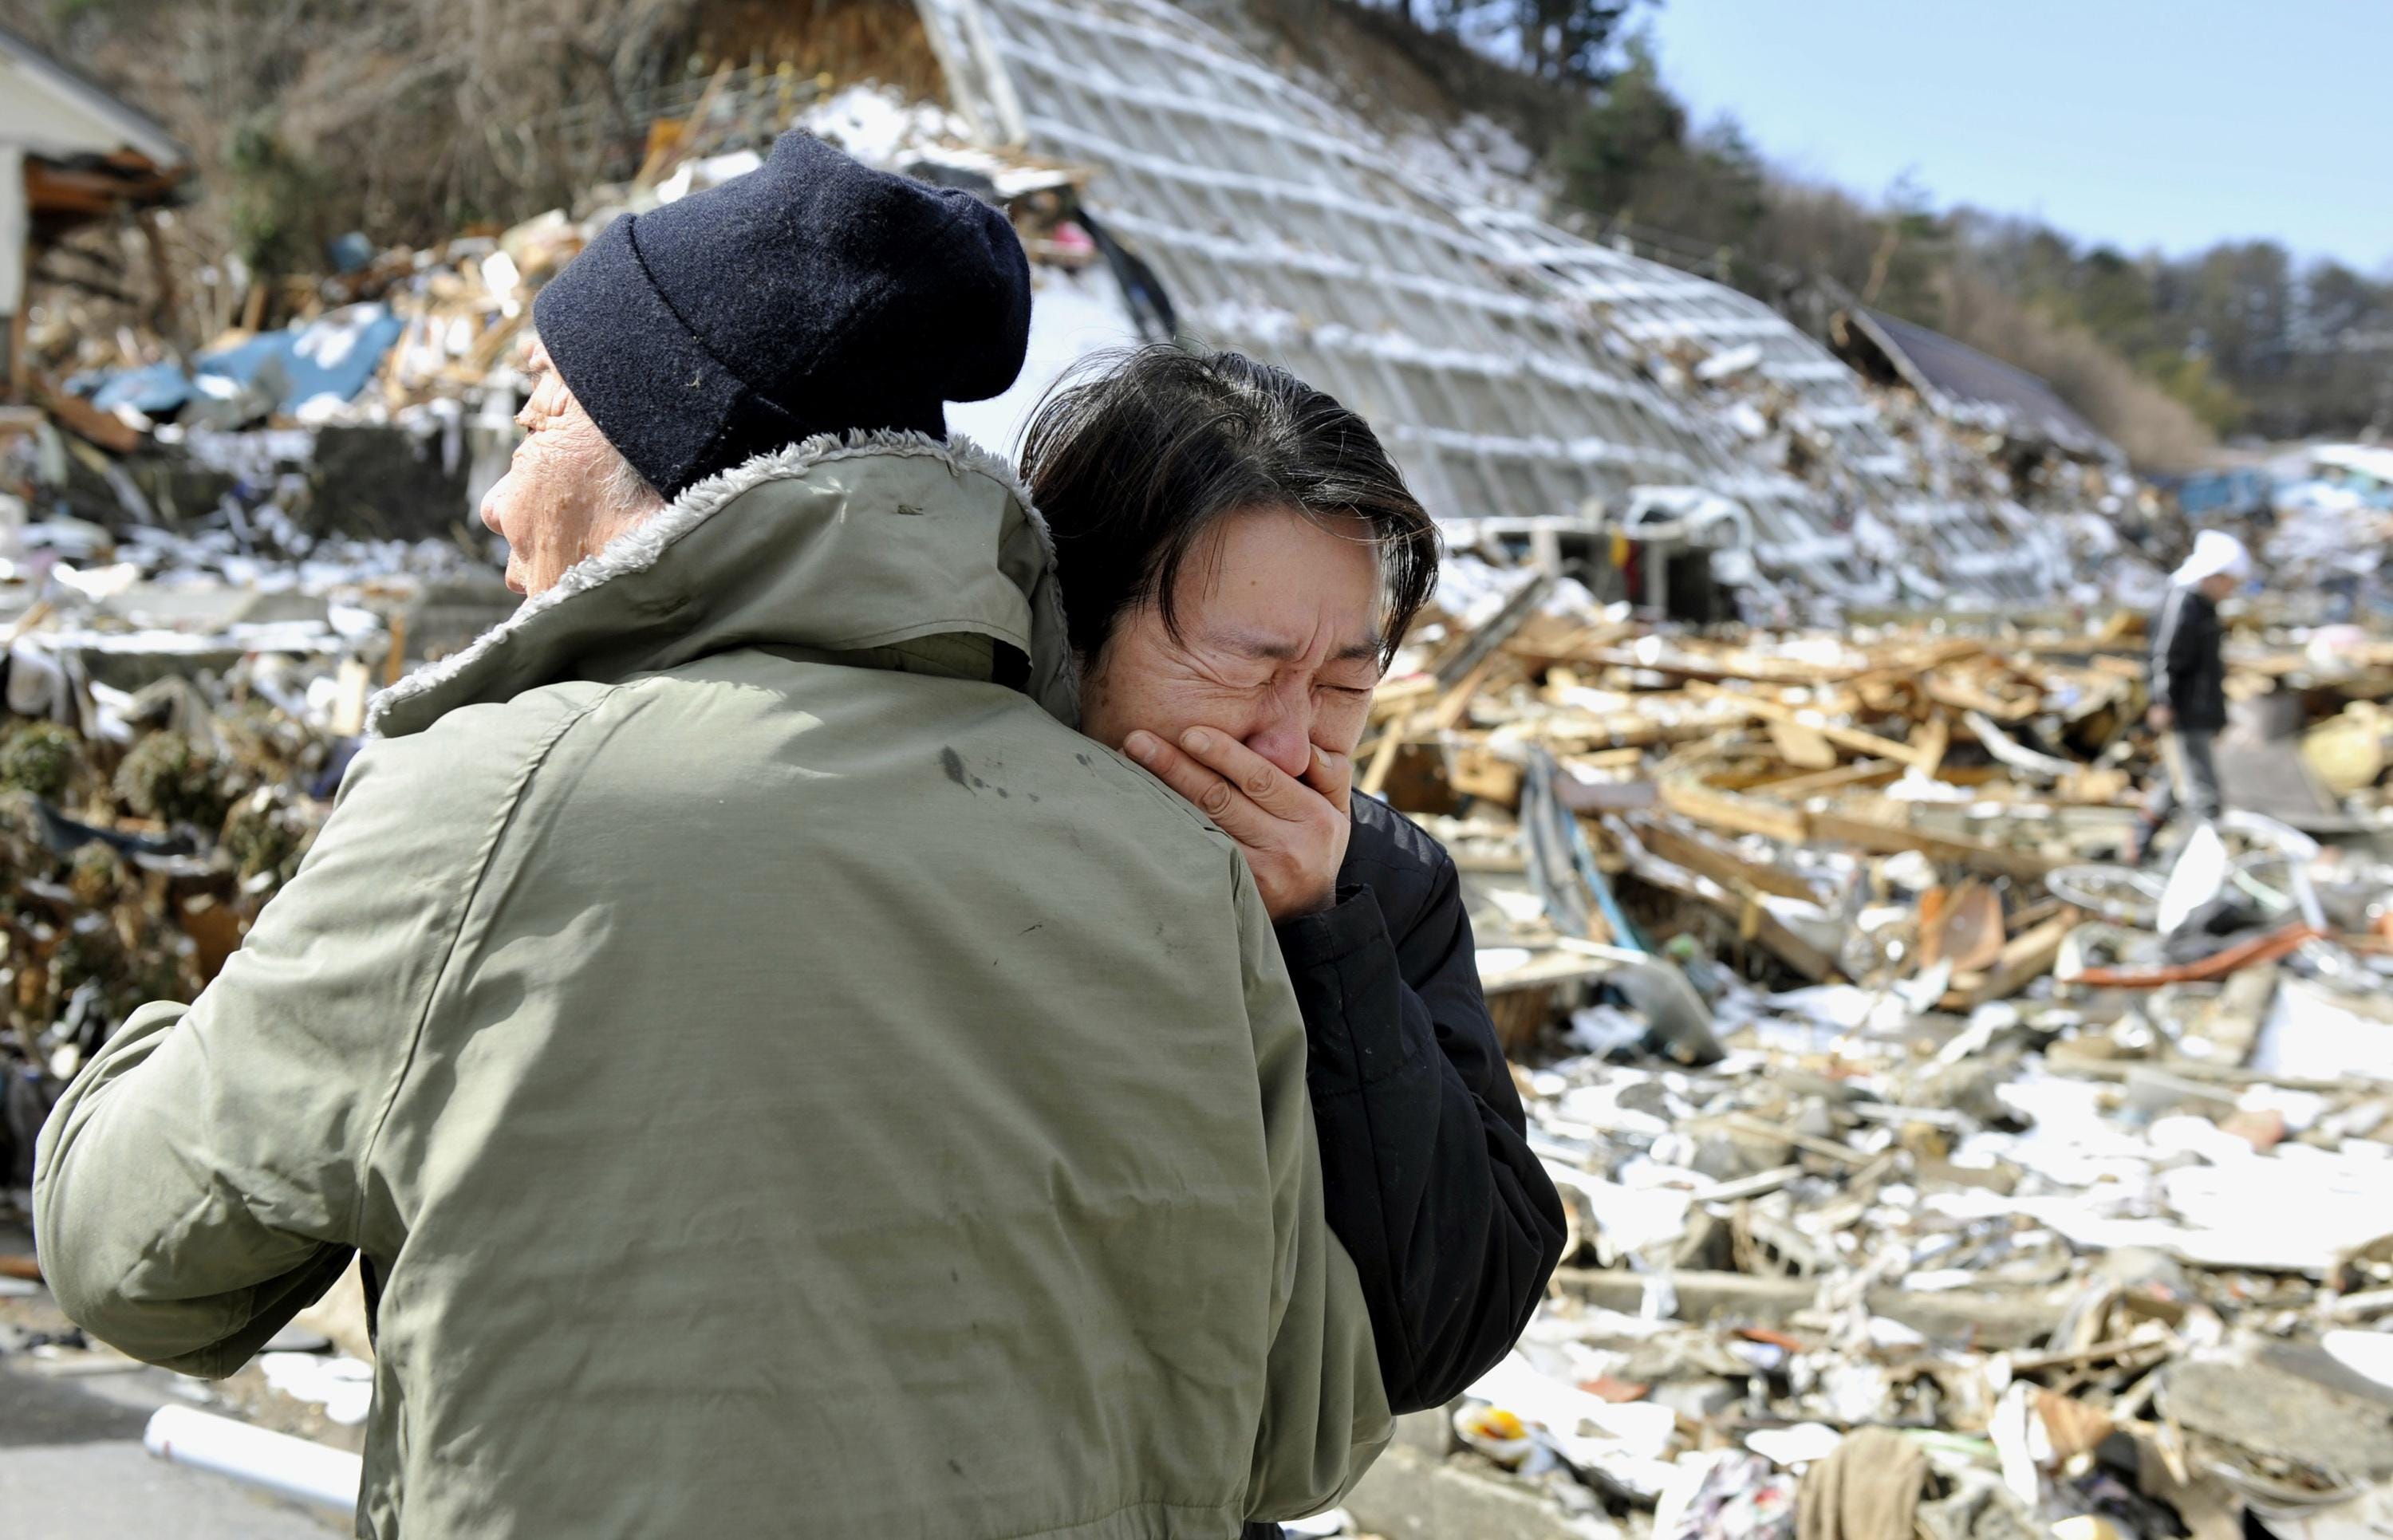 Wordwall disasters. Землетрясение и ЦУНАМИ В Японии в 2011 году. Землетрясение в Японии 2011 года.